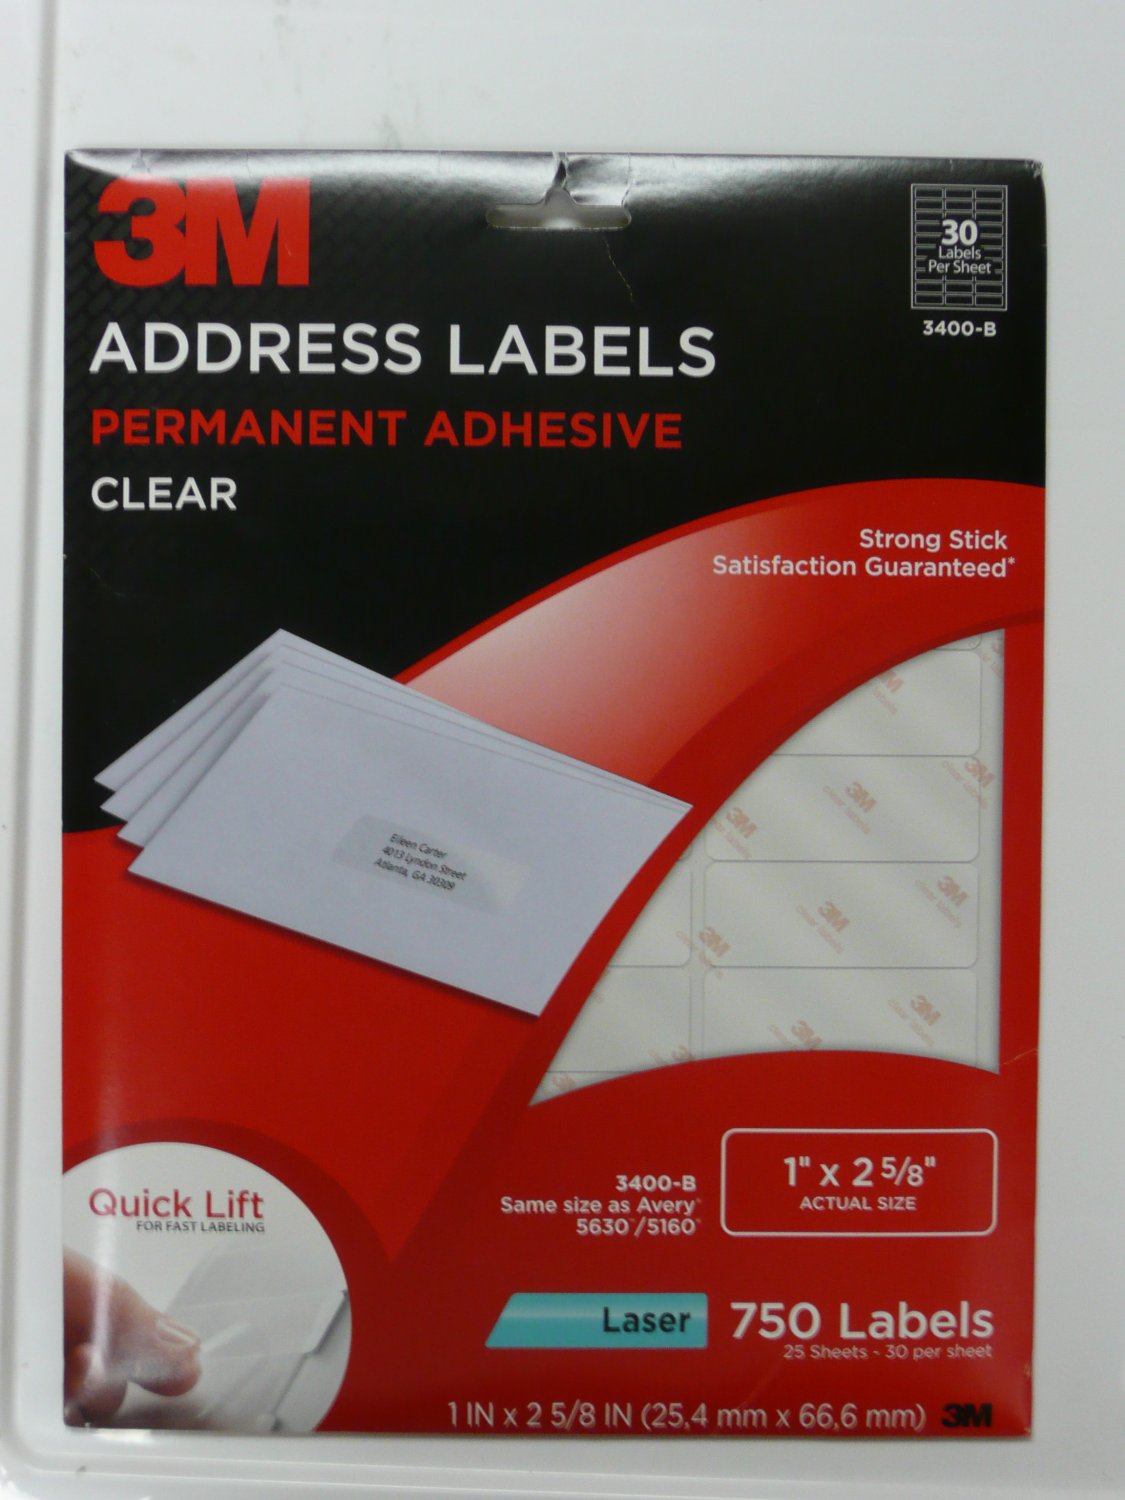 3m-address-labels-clear-laser-750-pk-1-x-2-5-8-3400-b-similar-to